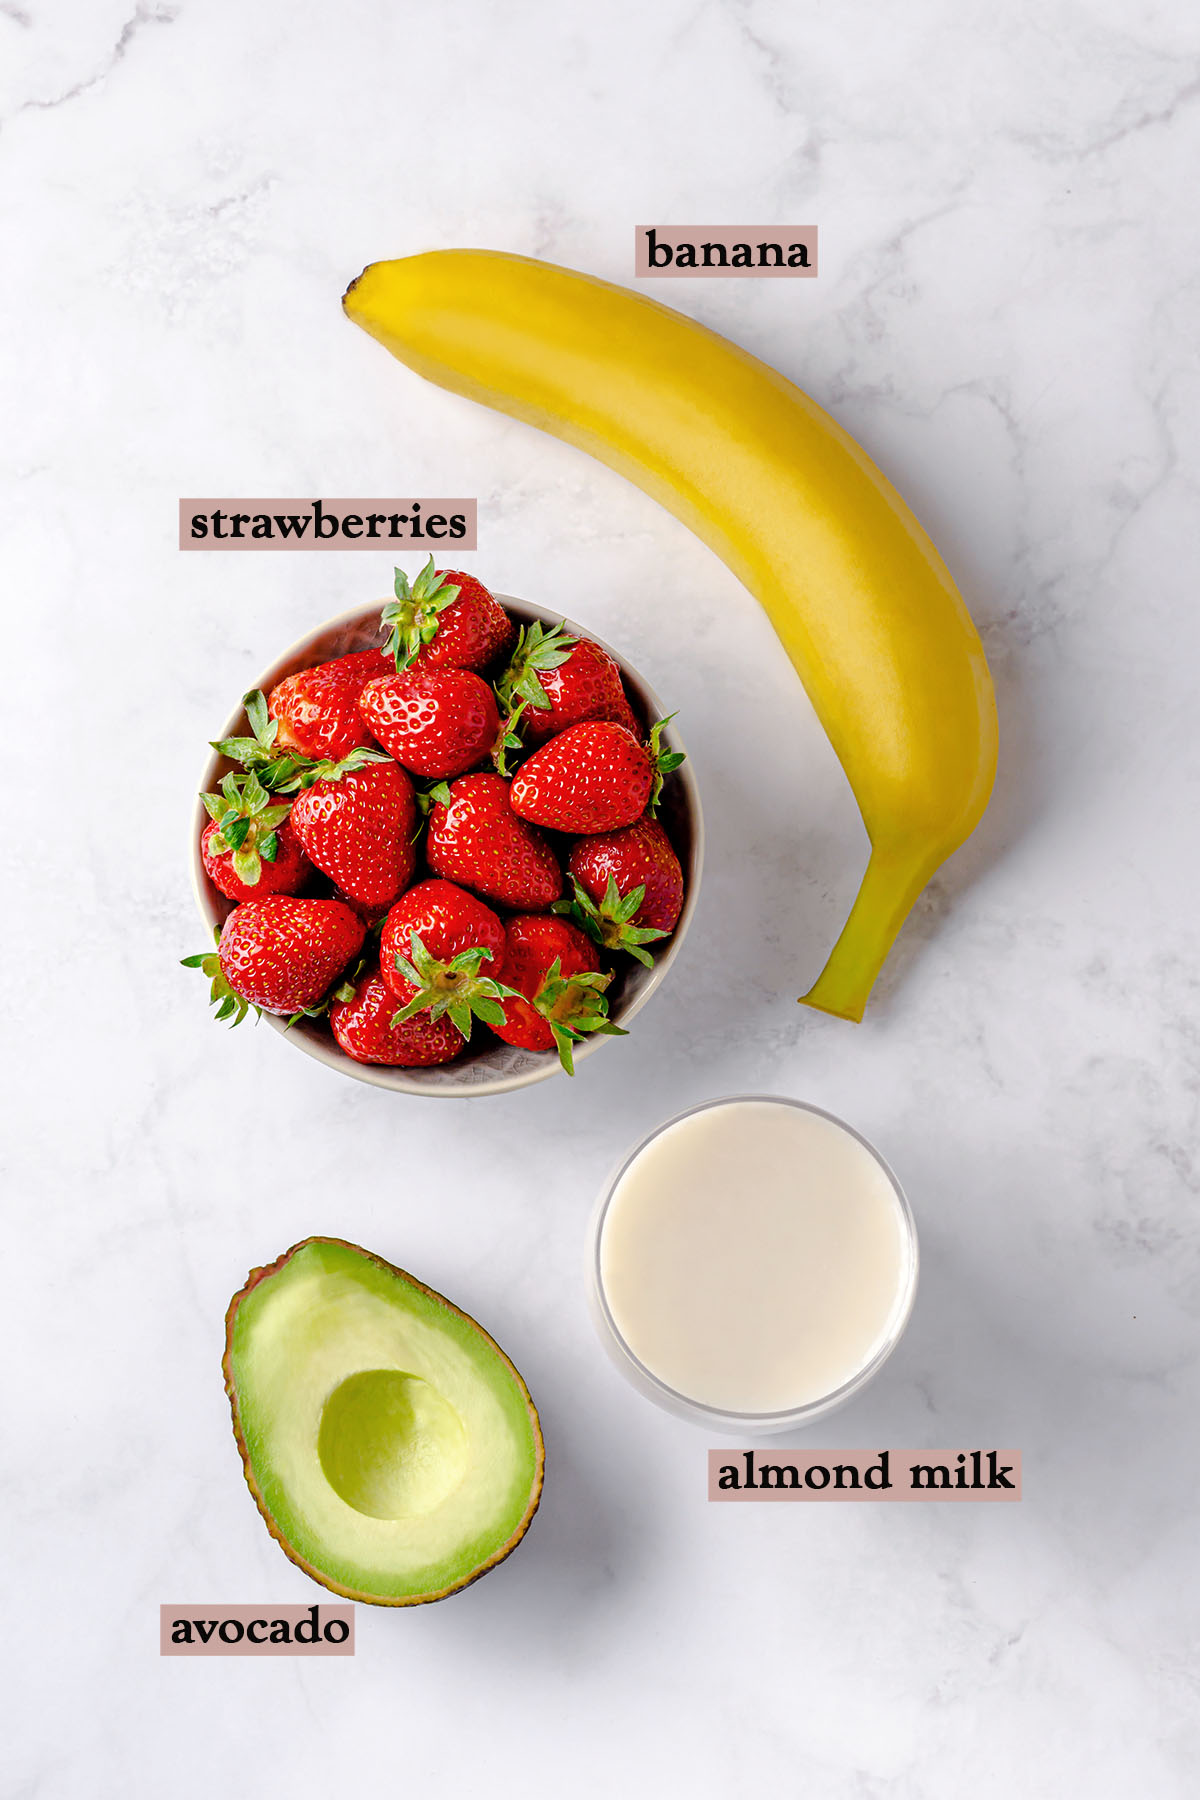 Ingredients for strawberry banana avocado smoothie